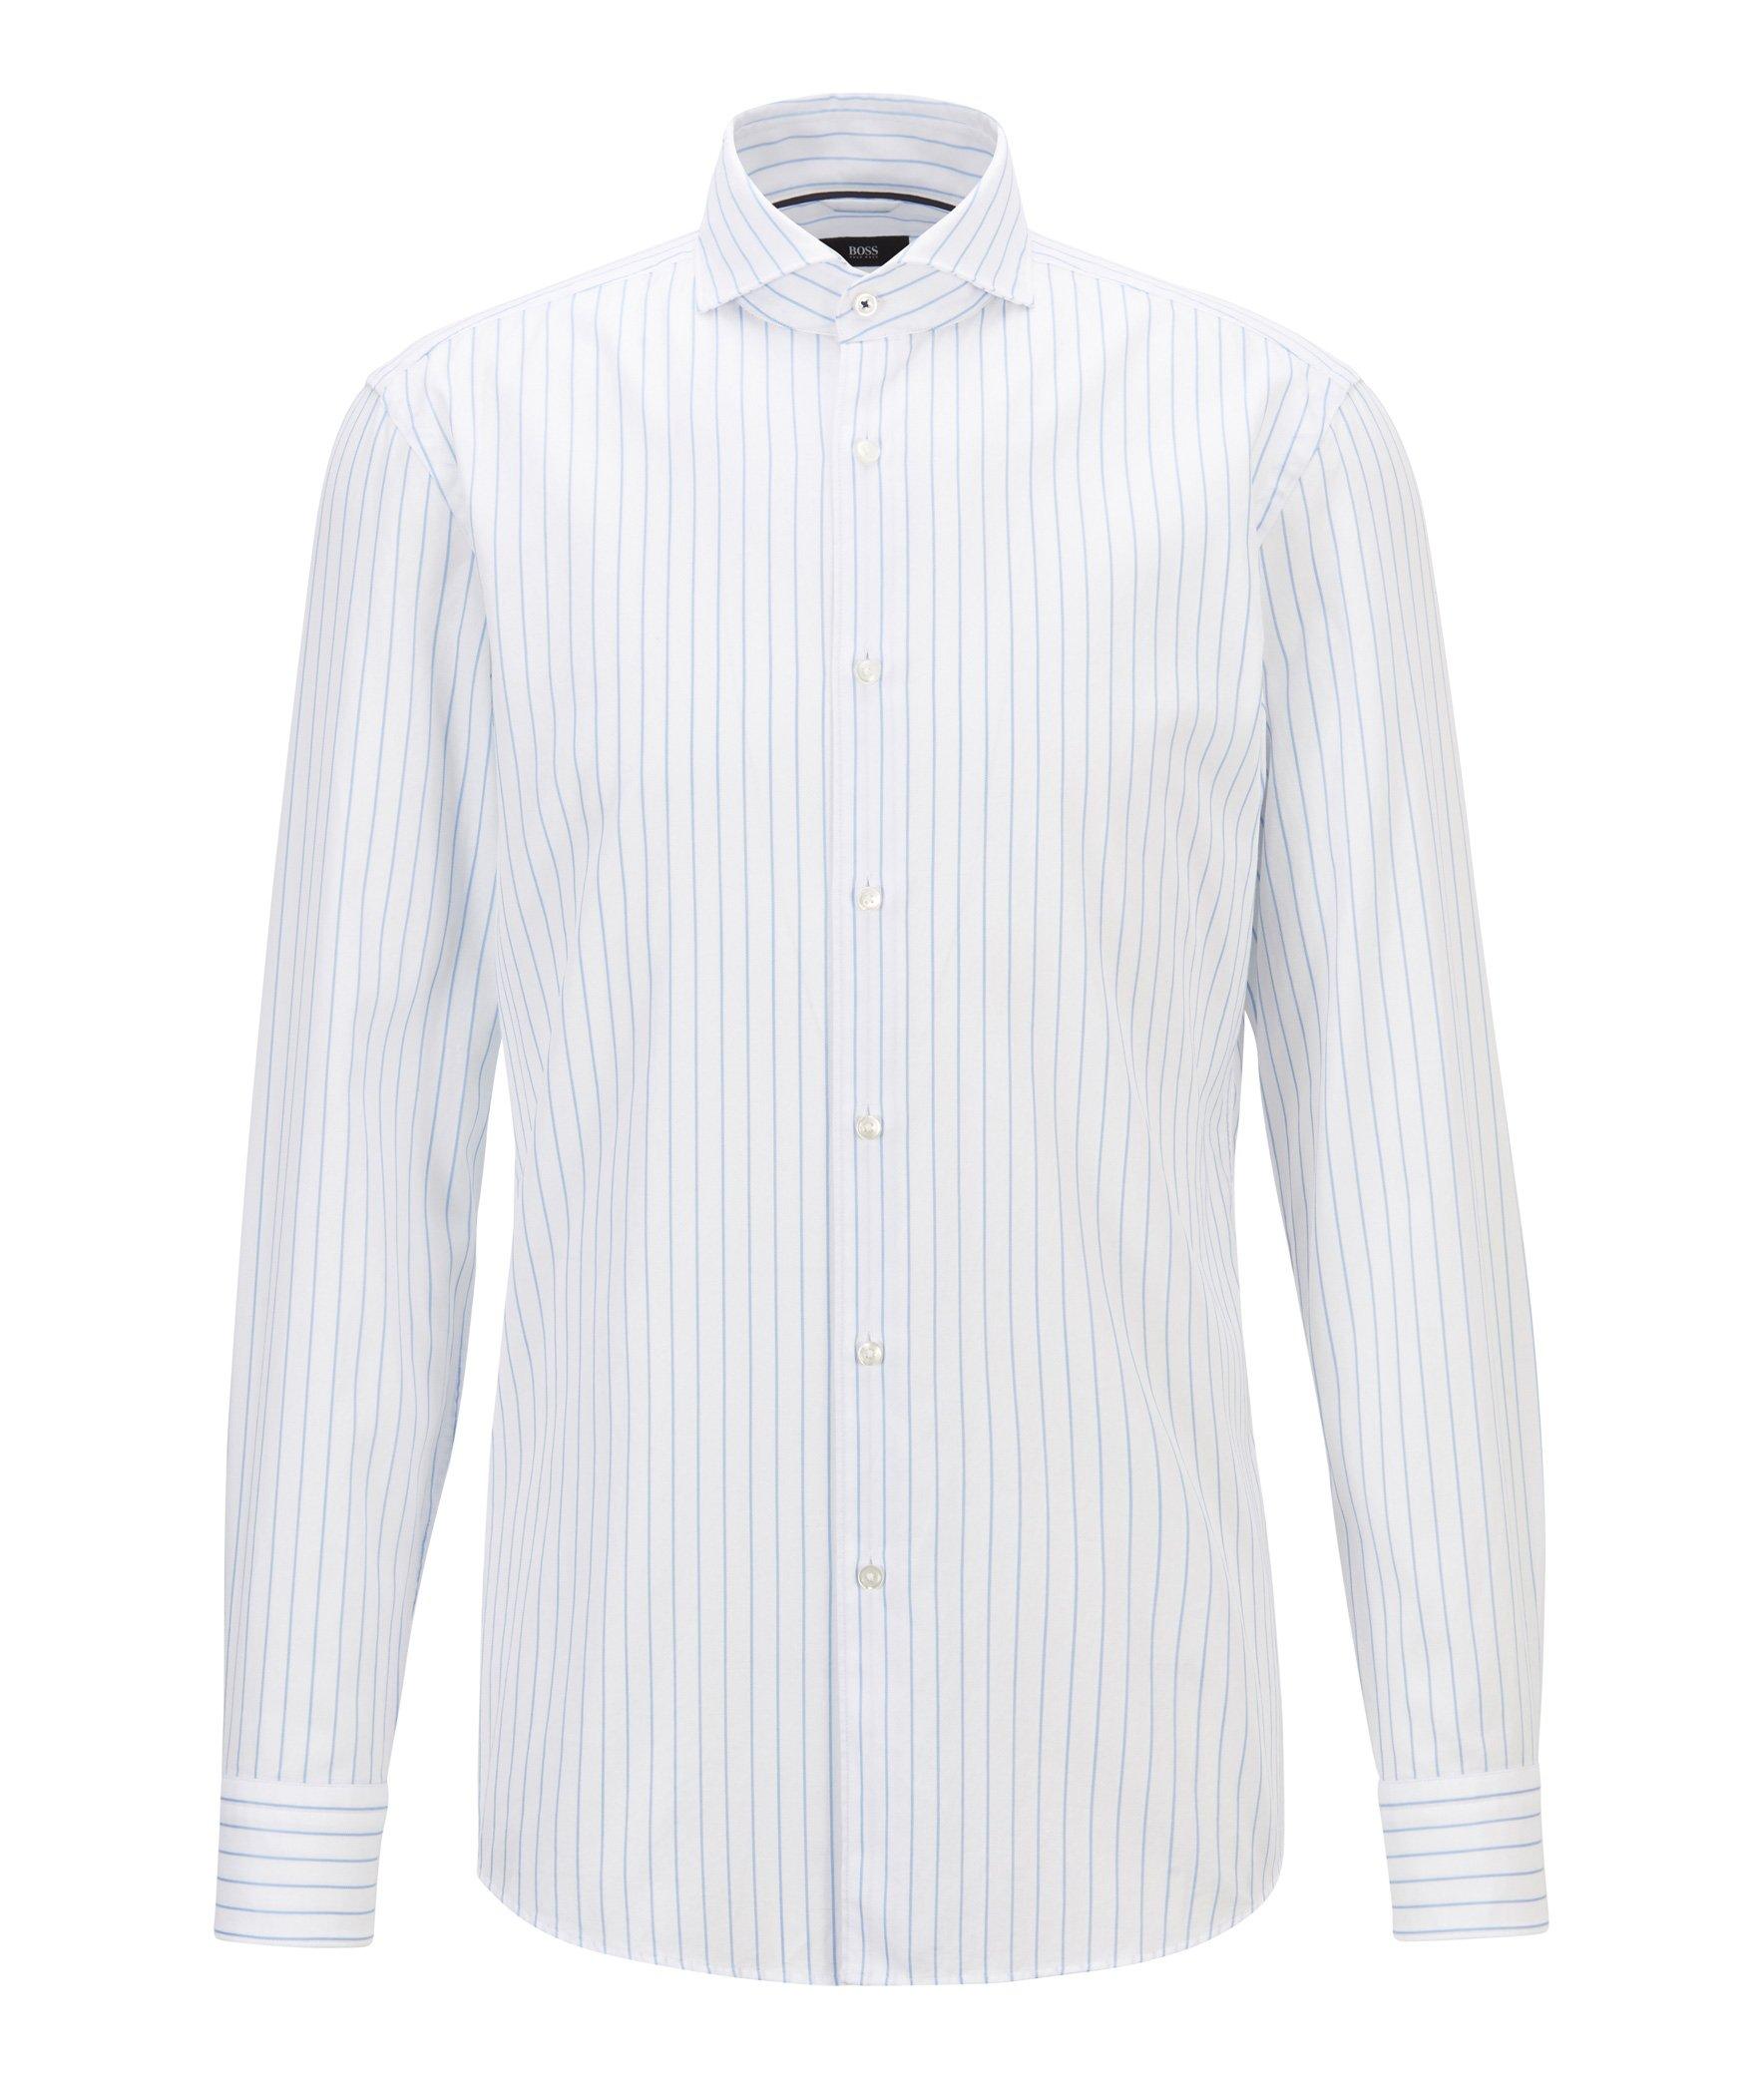 Jemerson Slim-Fit Cotton Dress Shirt image 0